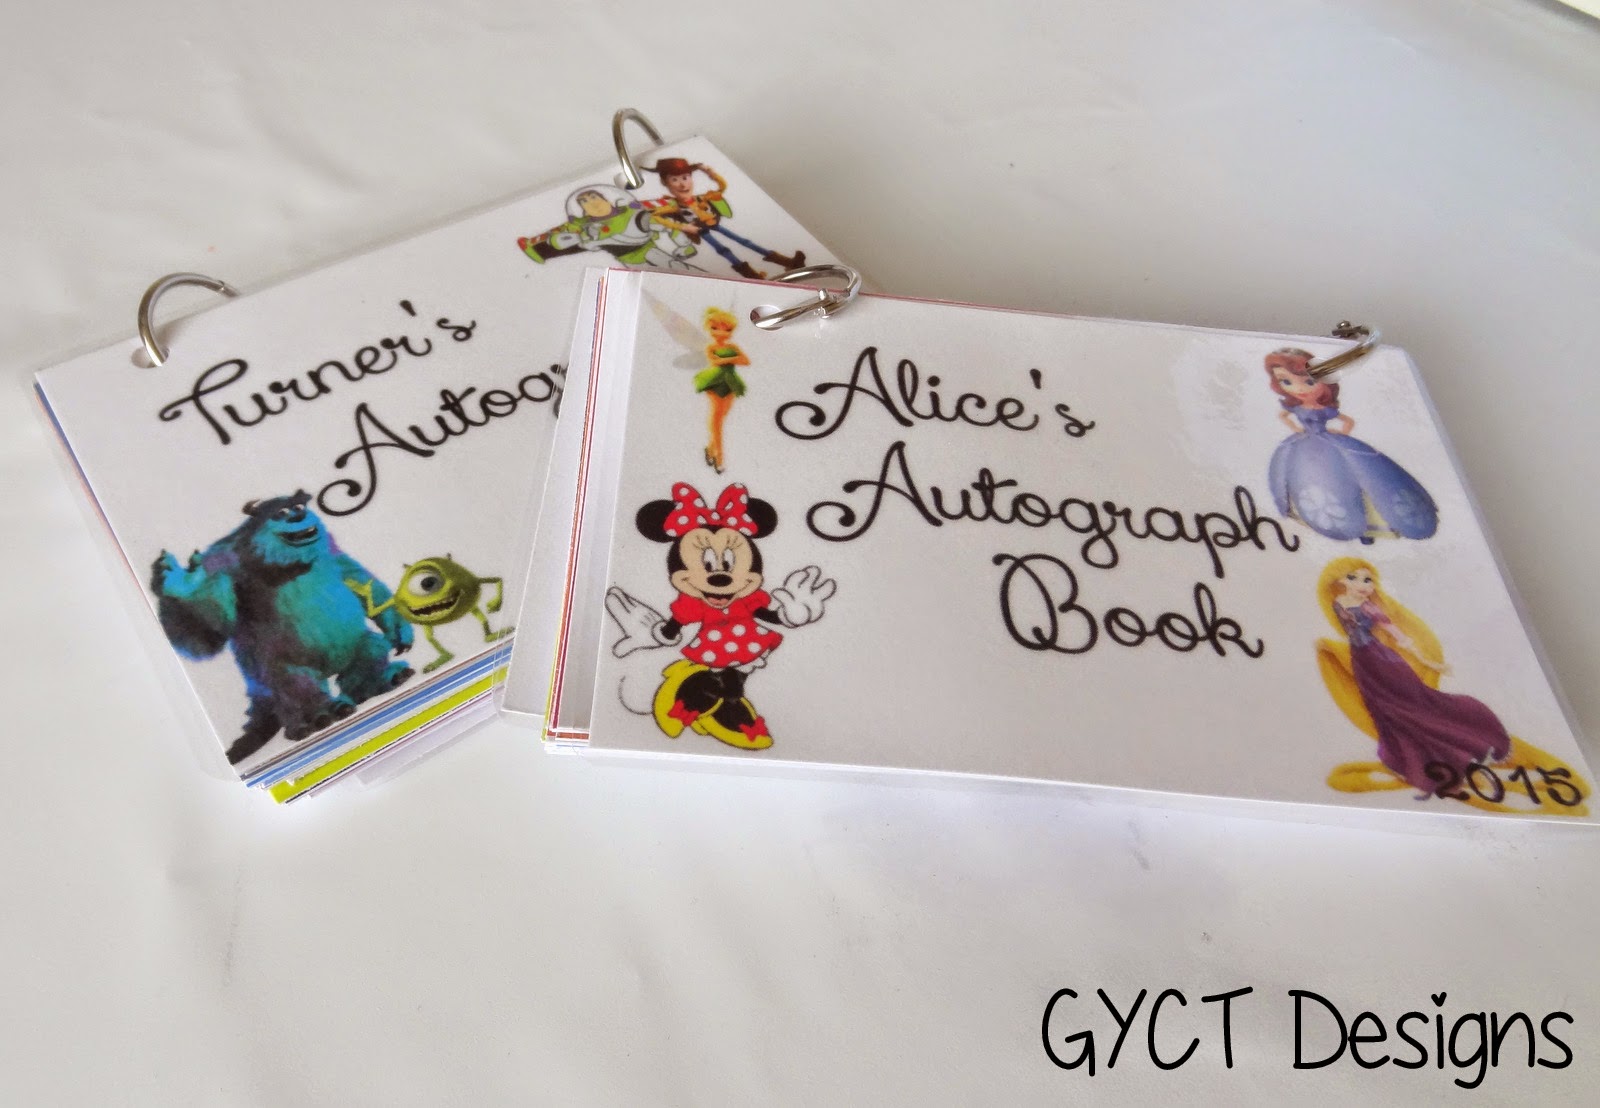 DIY Disney Autograph Book + Free Printable - The Cards We Drew